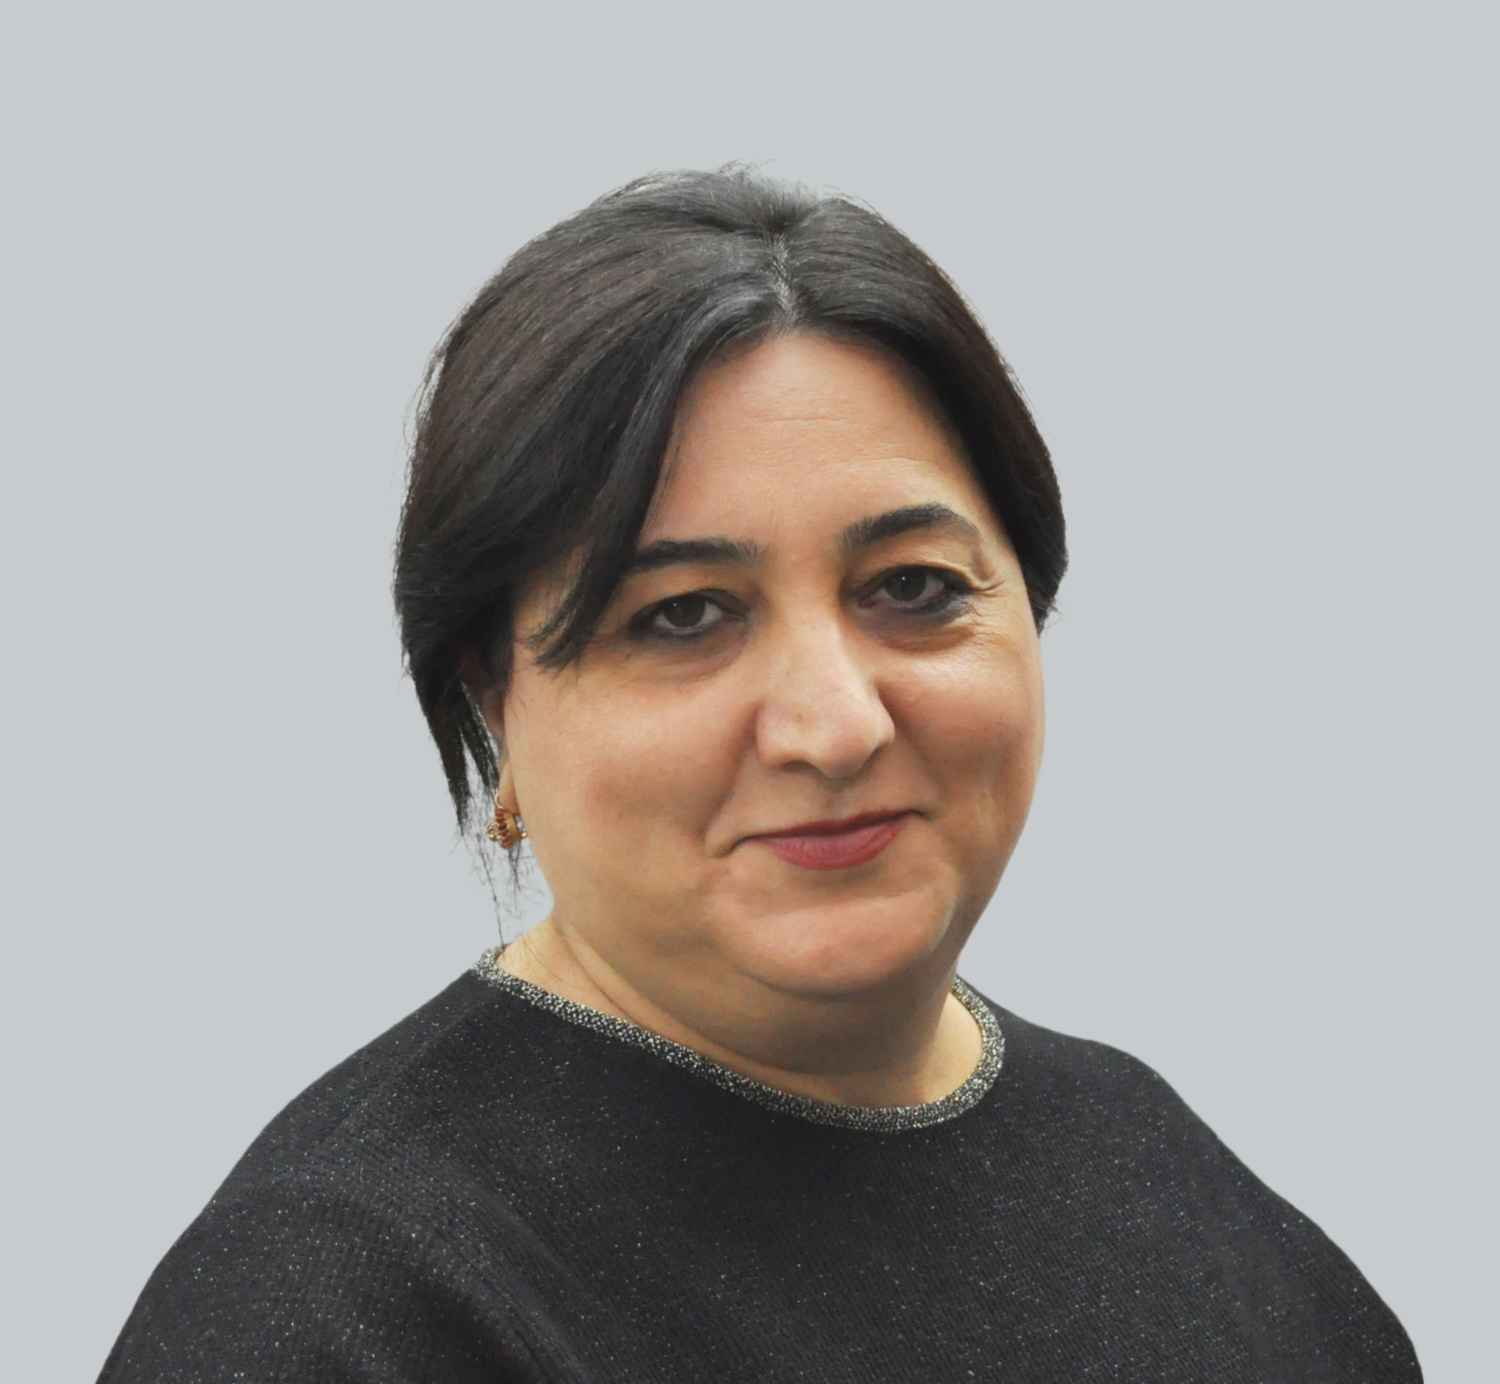 Elnara Mehdiyeva